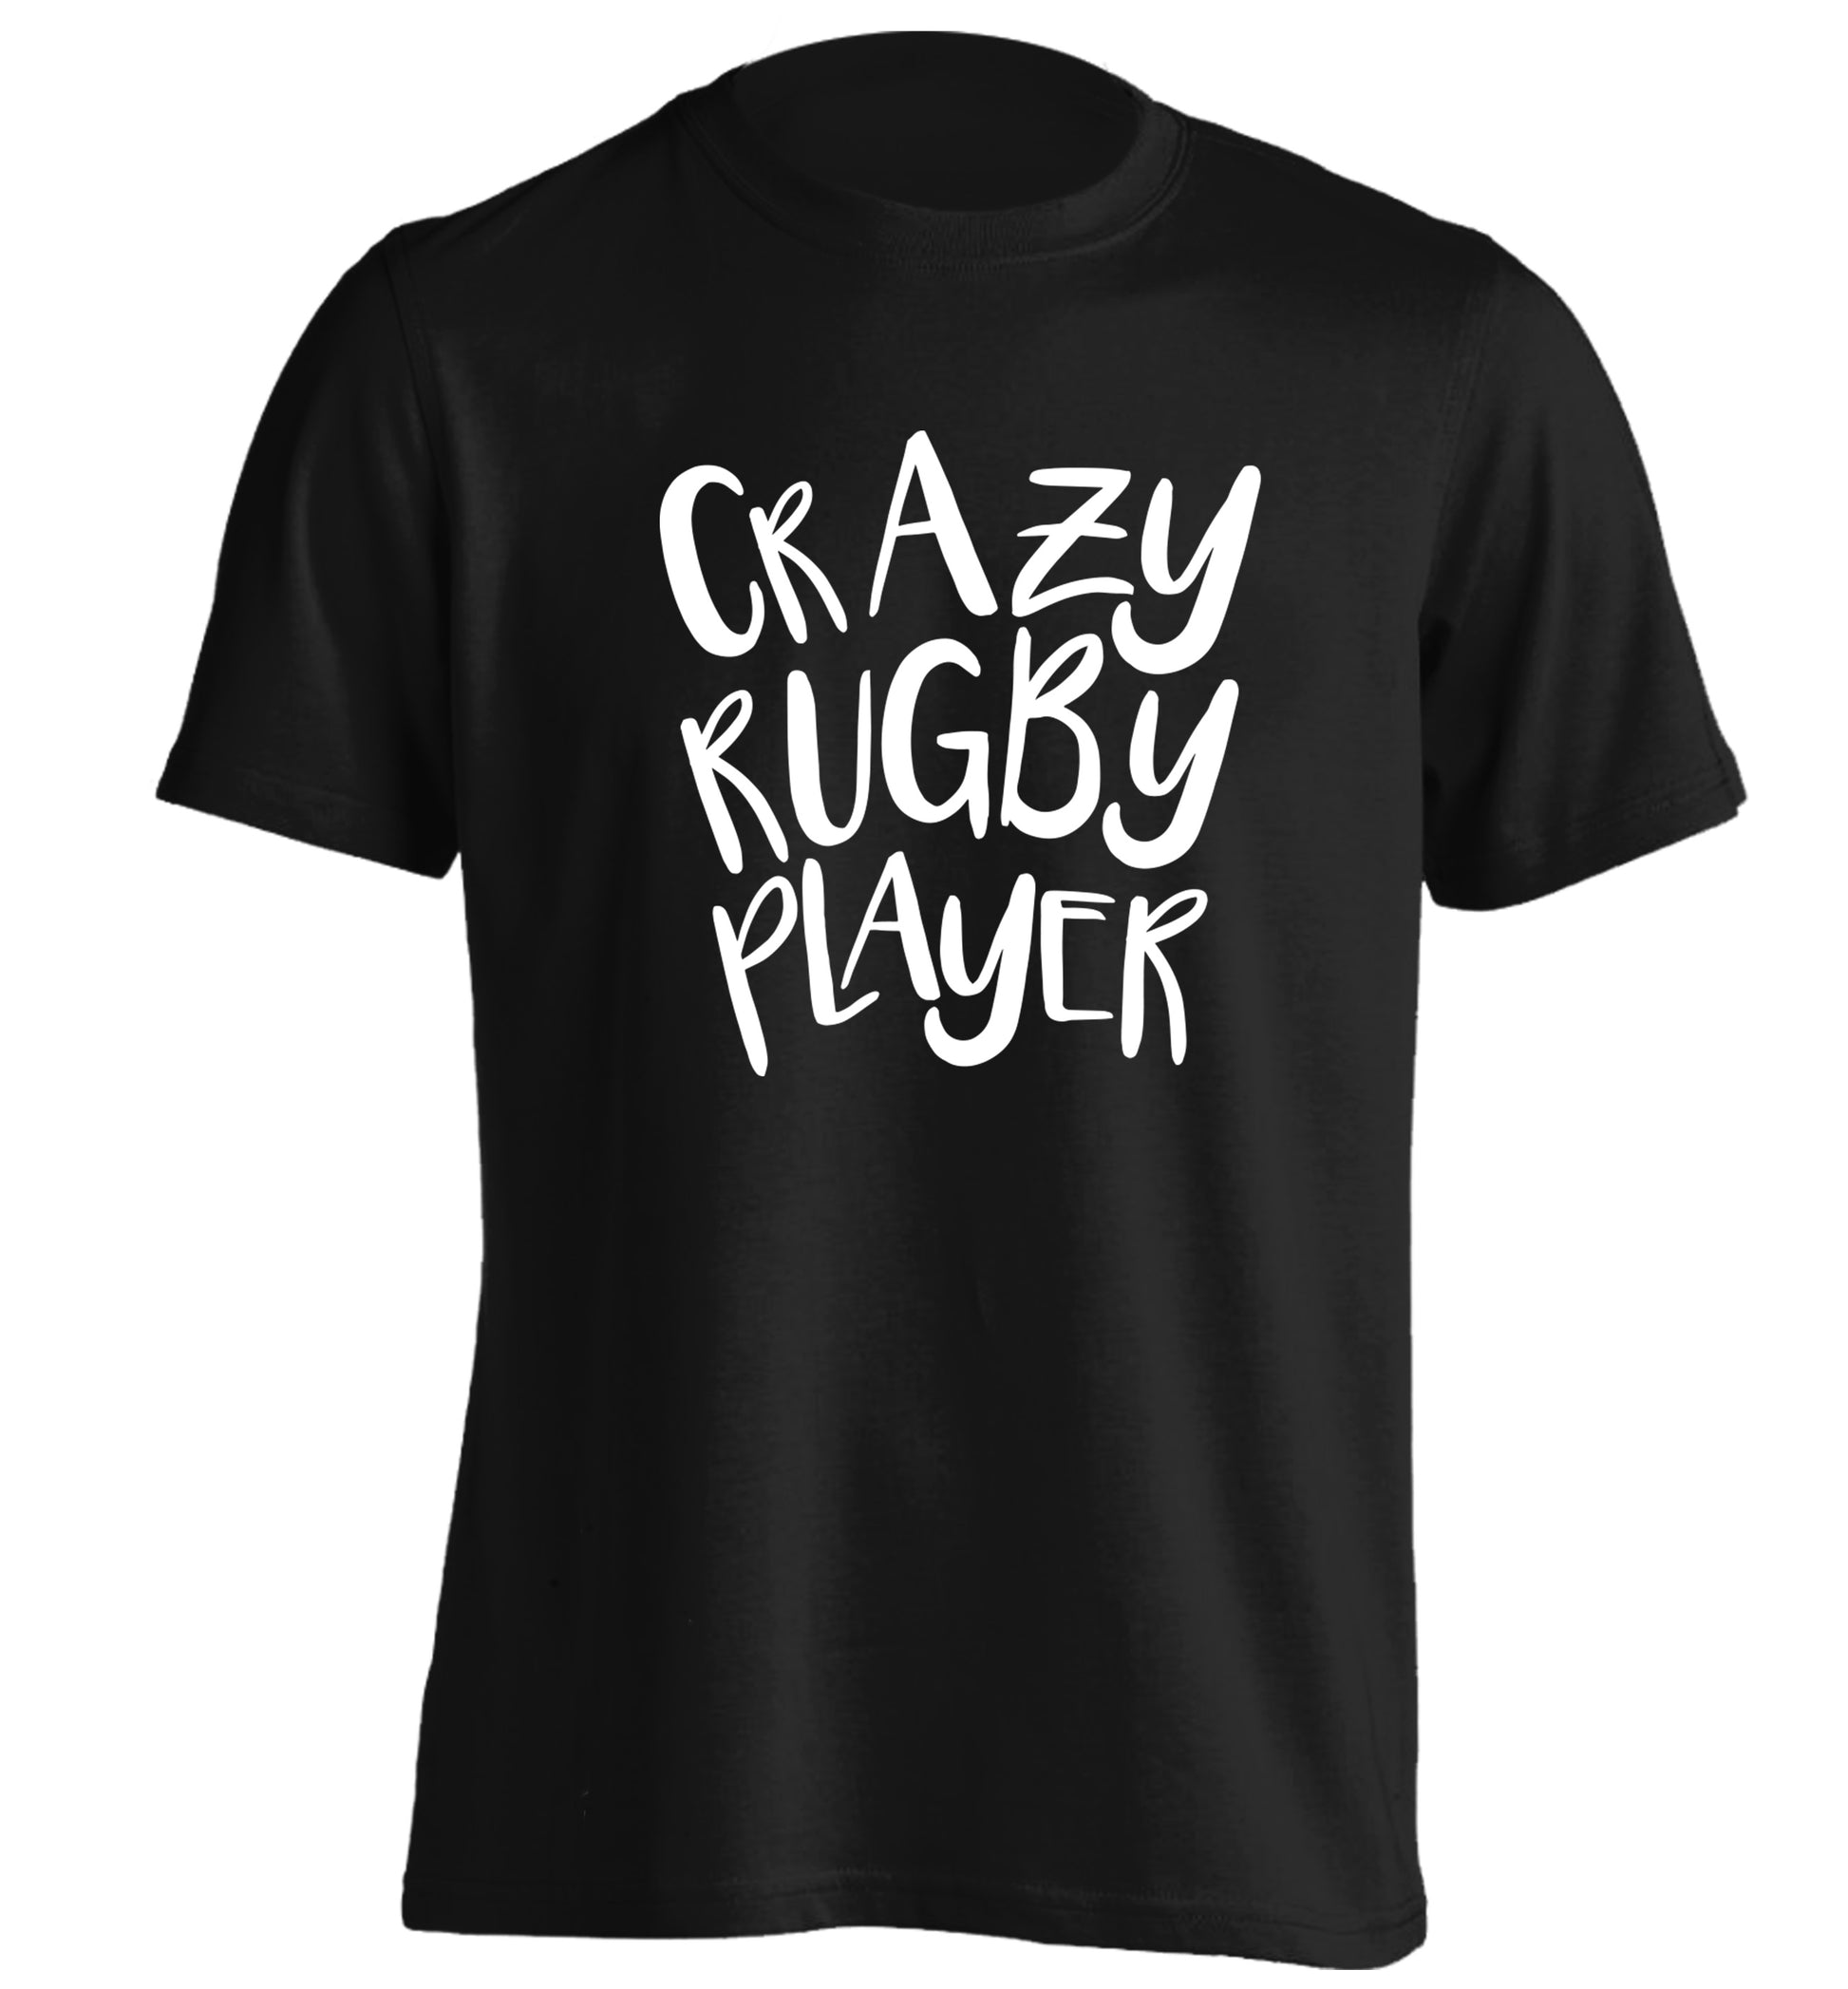 Crazy rugby player adults unisex black Tshirt 2XL